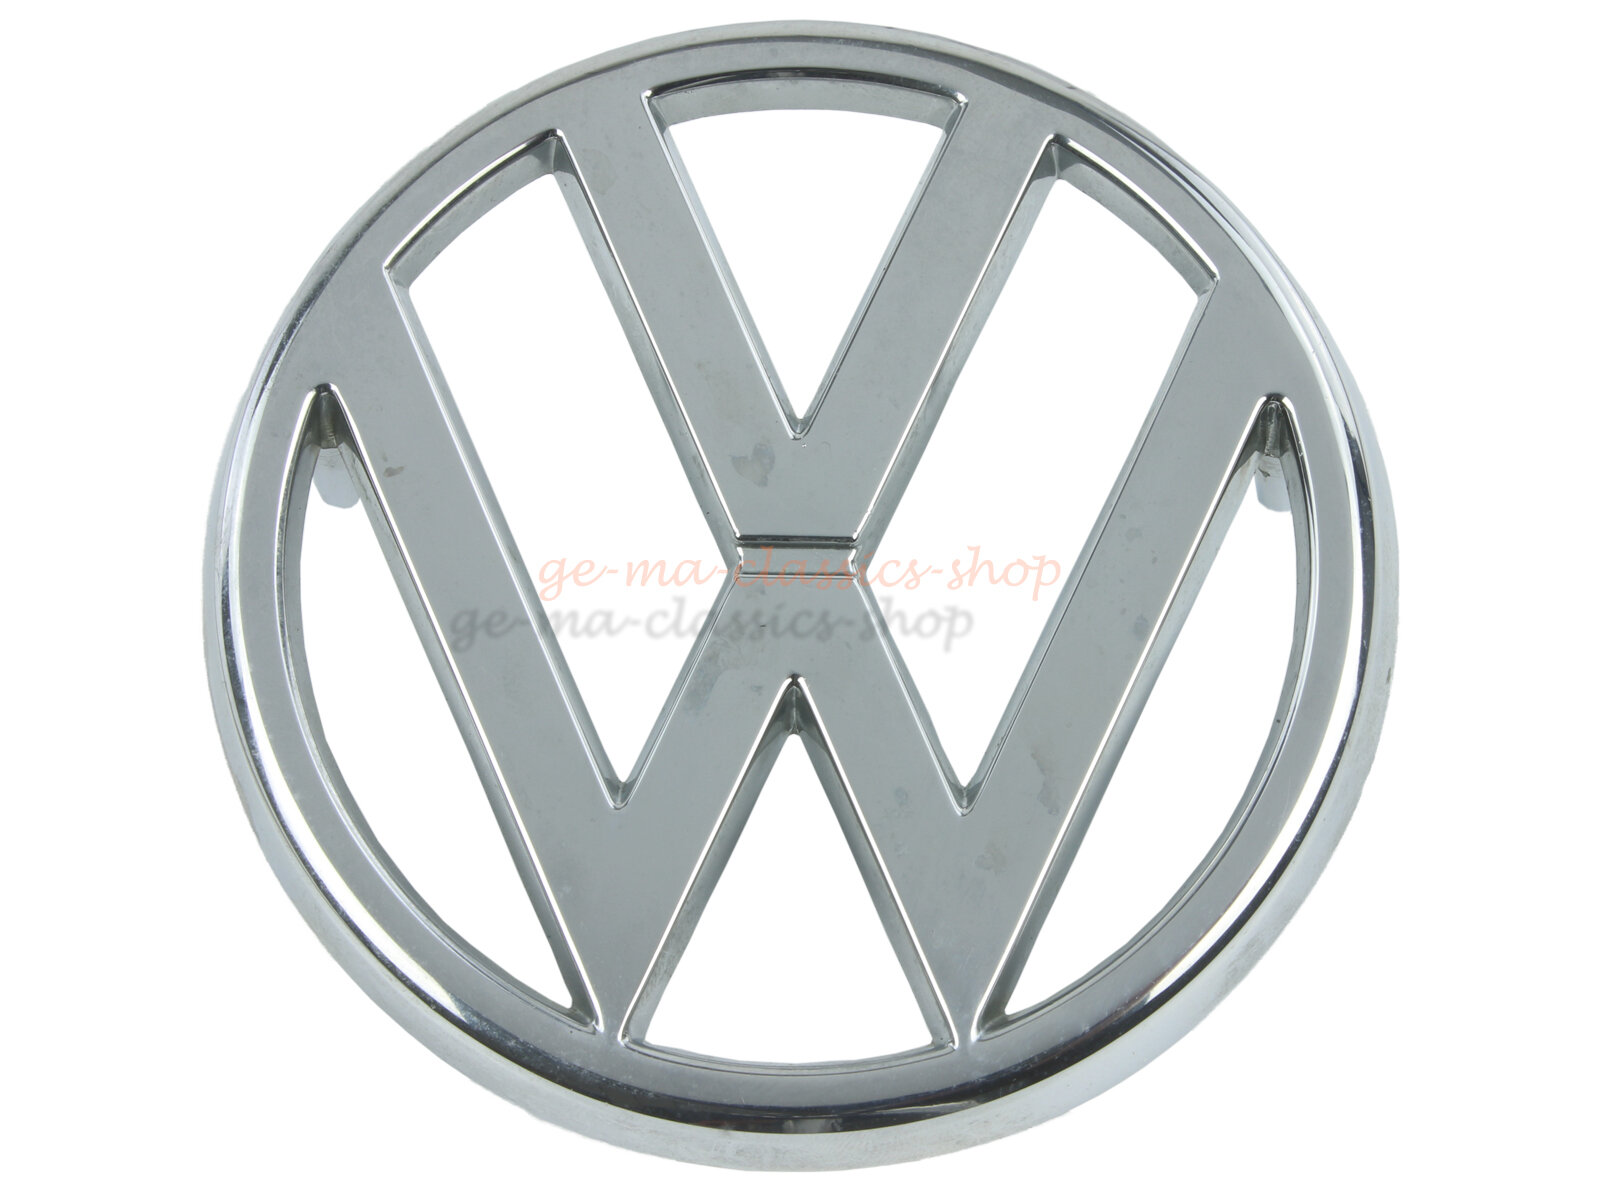 Original VW Emblem Silber NOS für VW Golf 1 Jetta 1